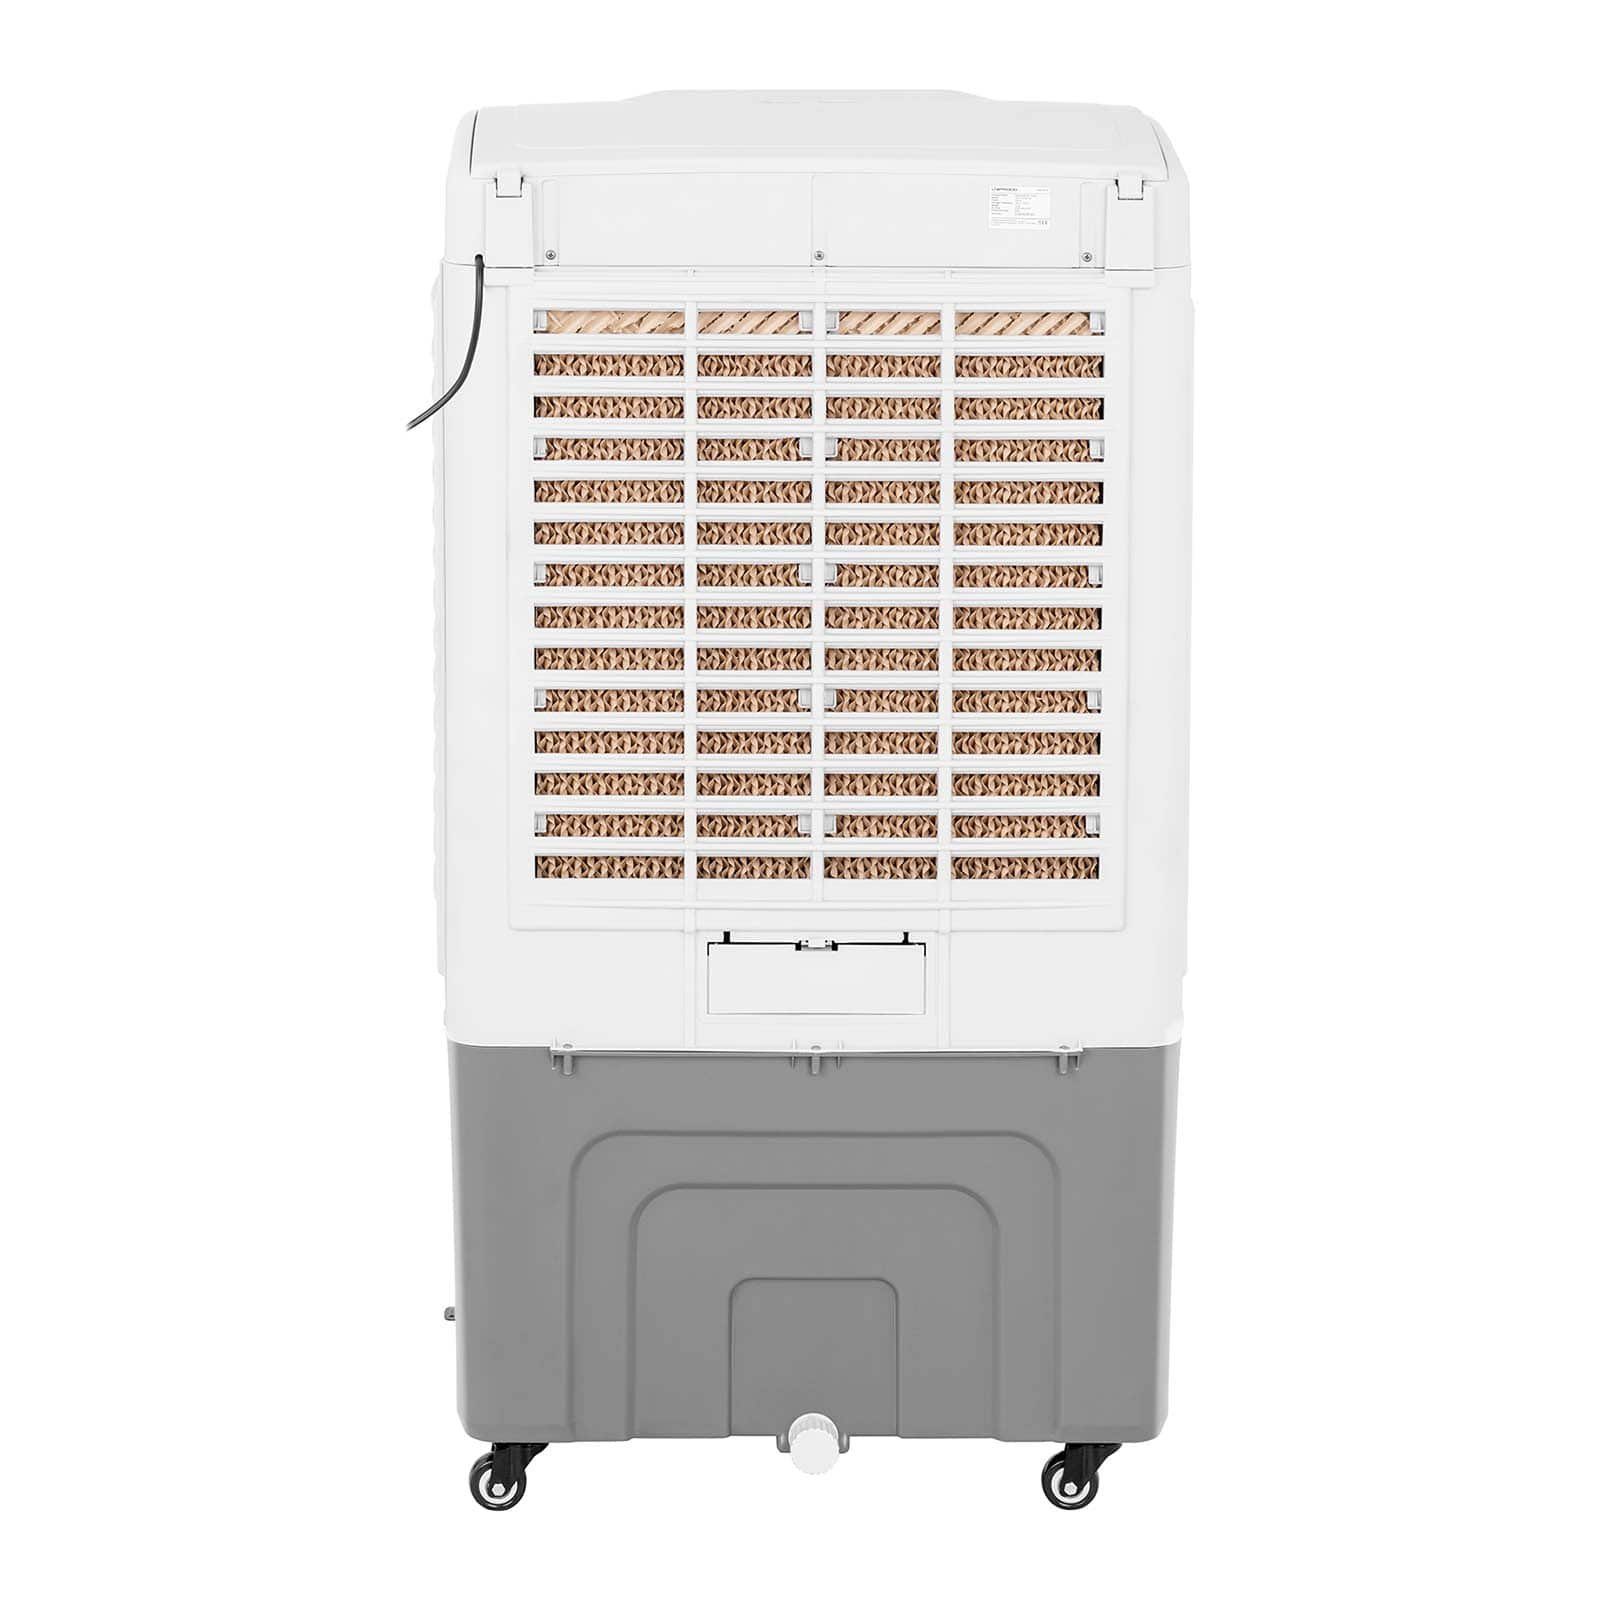 Uniprodo Ventilatorkombigerät Luftkühler mobil Luftreiniger Luftbefeuchter 3-in-1 Kühlgerät